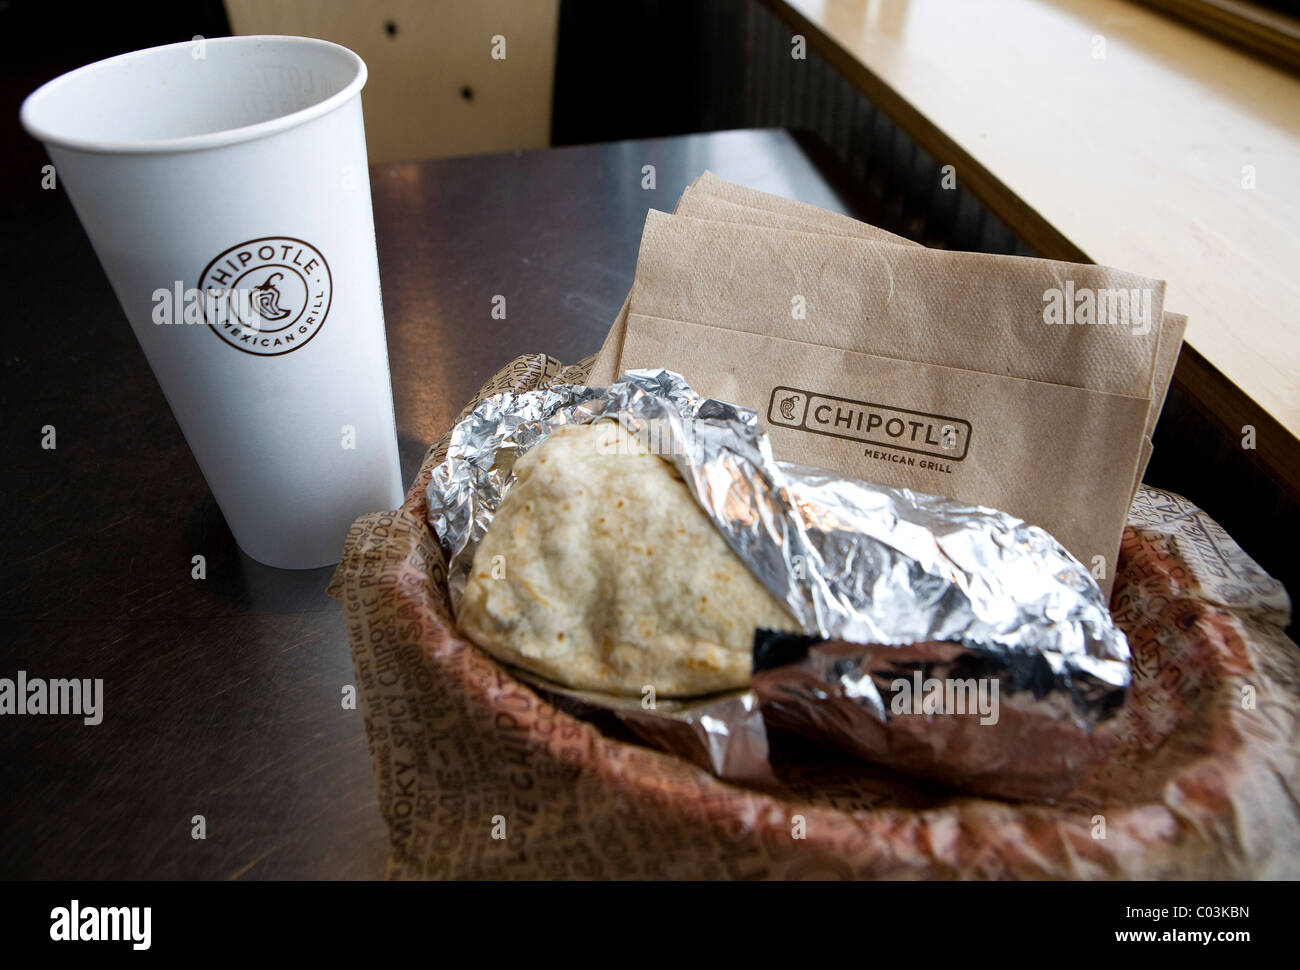 A Chipotle burrito and taco fast food restaurant.  Stock Photo